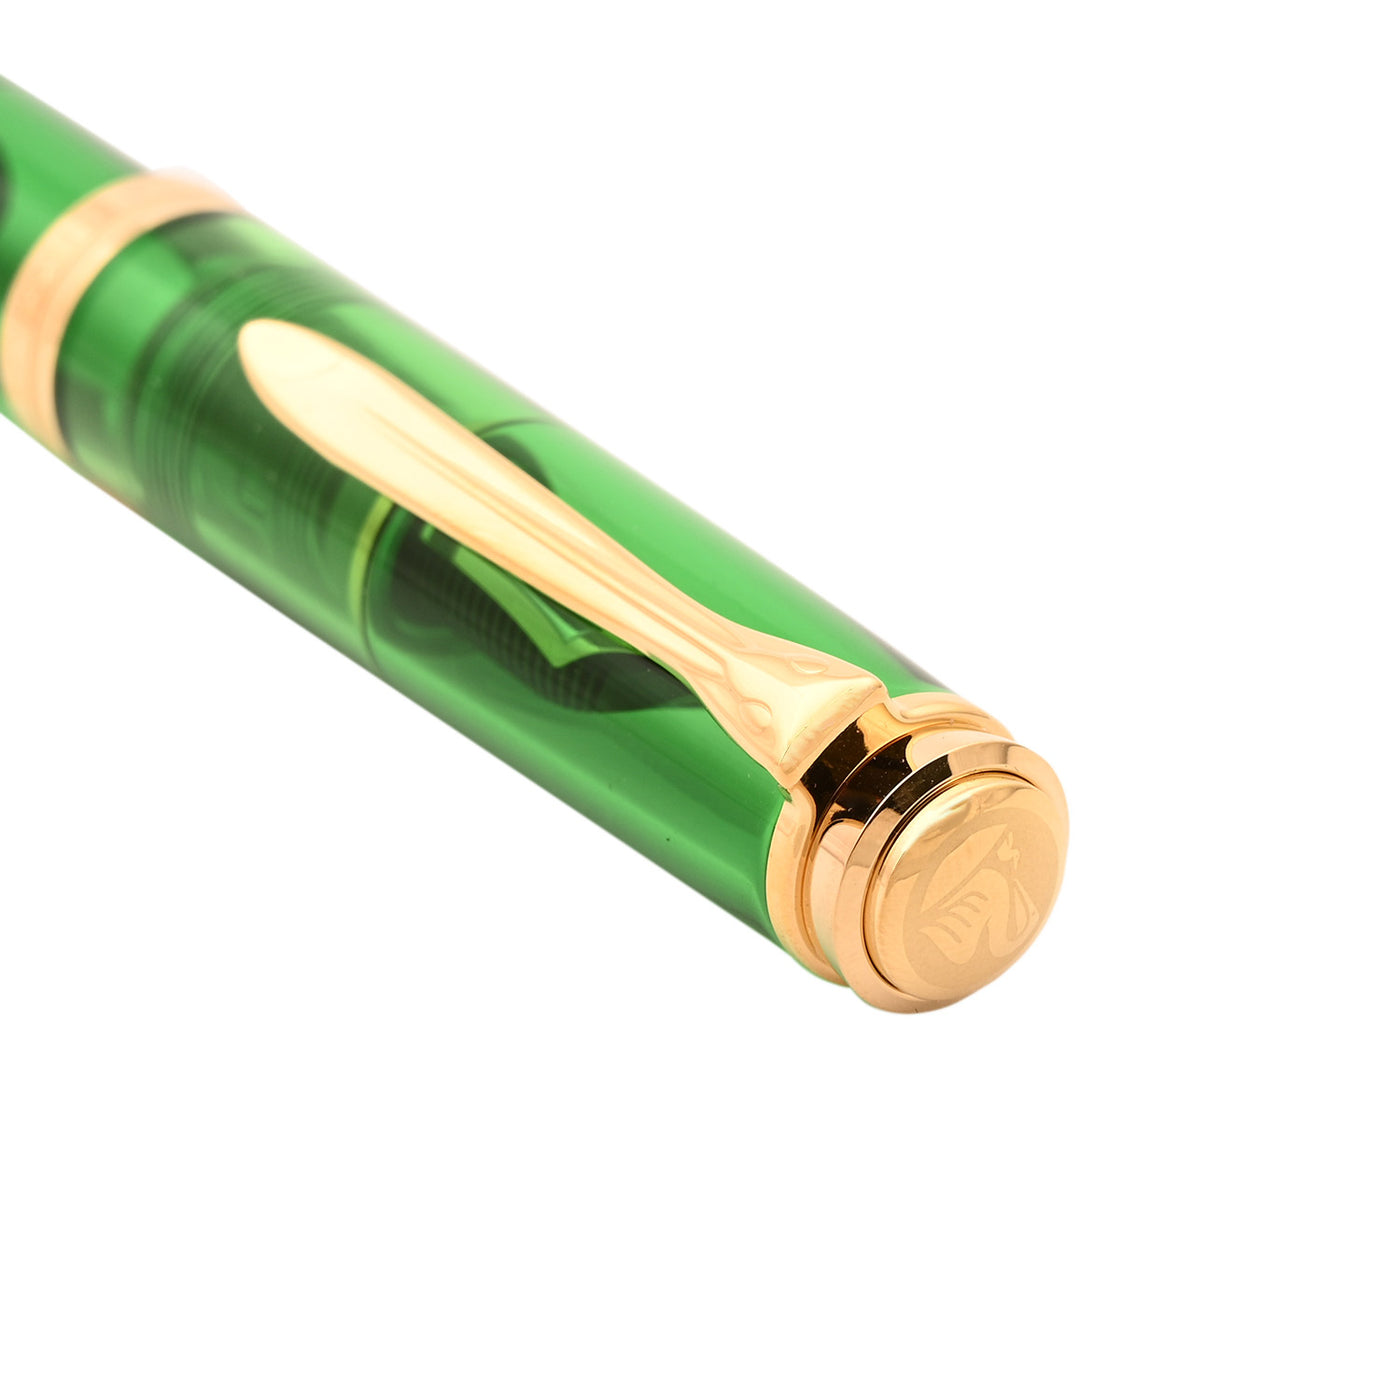 Pelikan M800 Fountain Pen - Green Demonstrator (Special Edition) 3 